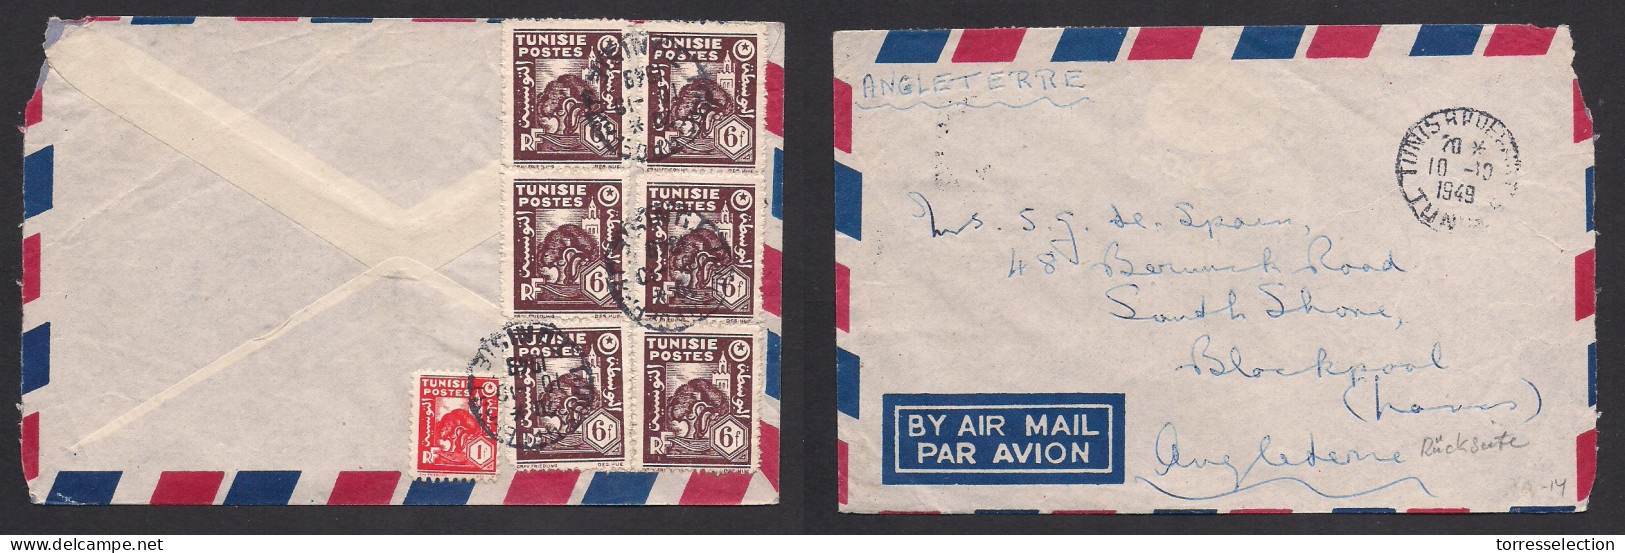 TUNISIA. 1948 (10 Oct) GPO - UK, Blackpool. Reverse Air Multifkd Envelope. VF. XSALE. - Tunisia